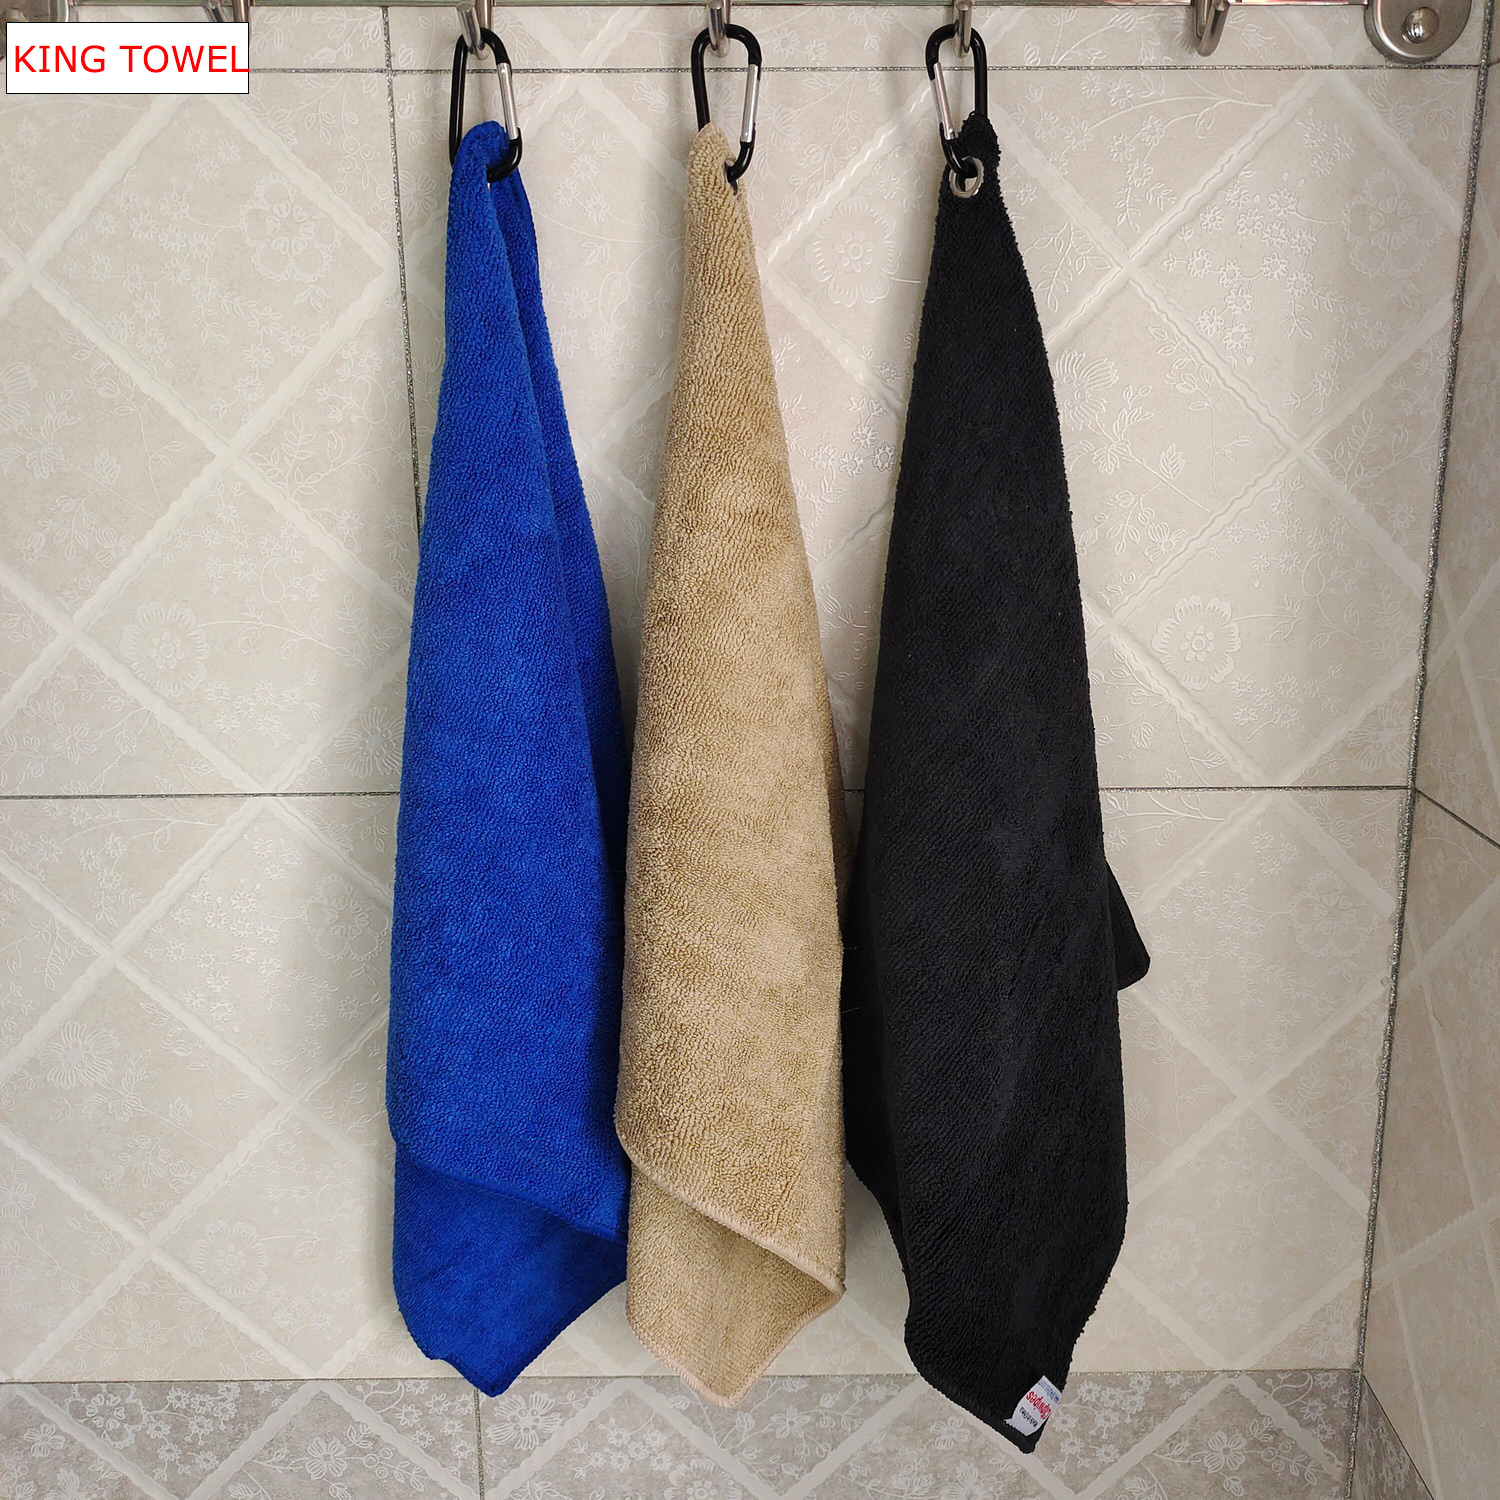 Microfiber hand towel supplier – Terry towel manufacturer – KING TOWEL